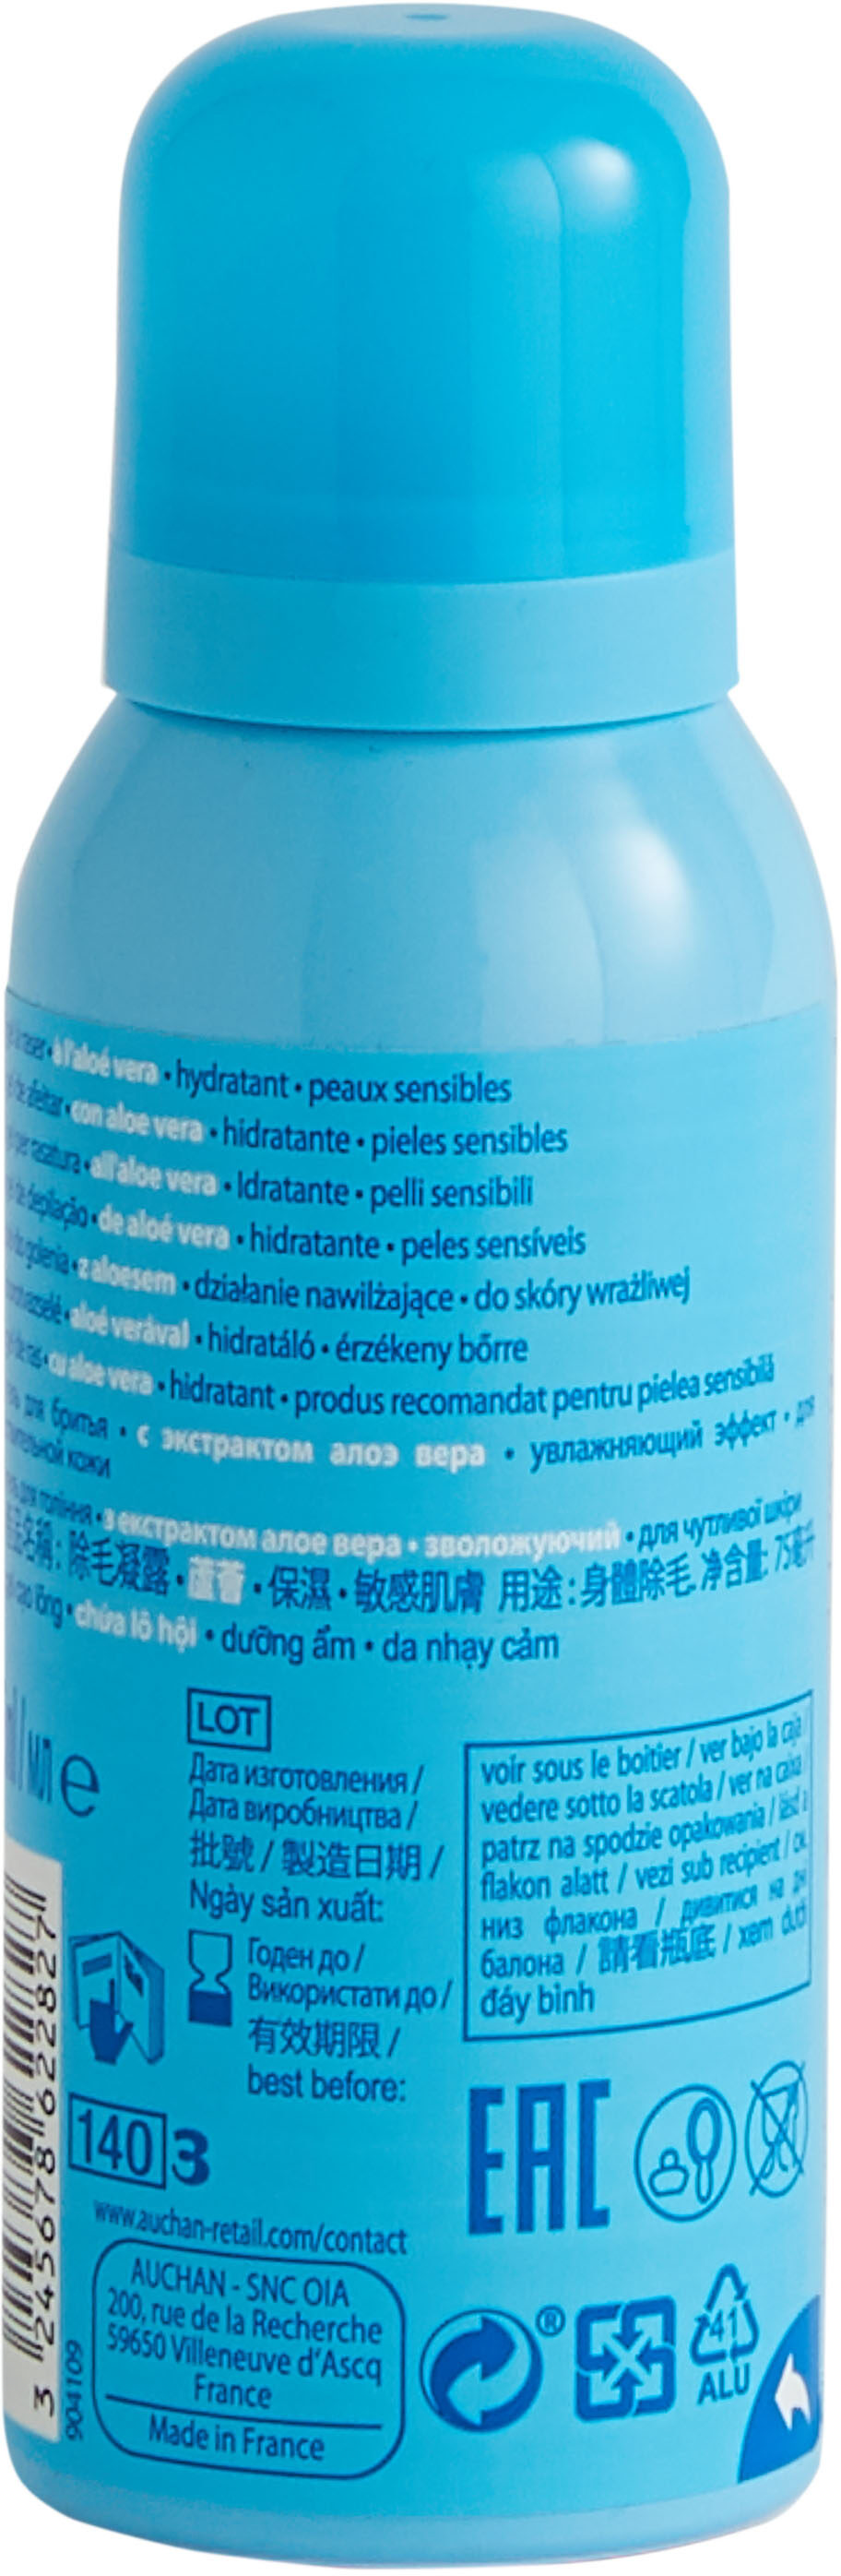 Cosmia - gel à raser - à l'aloe vera - peaux sensibles - 75 ml / volume nomial 140ml ? - Product - fr